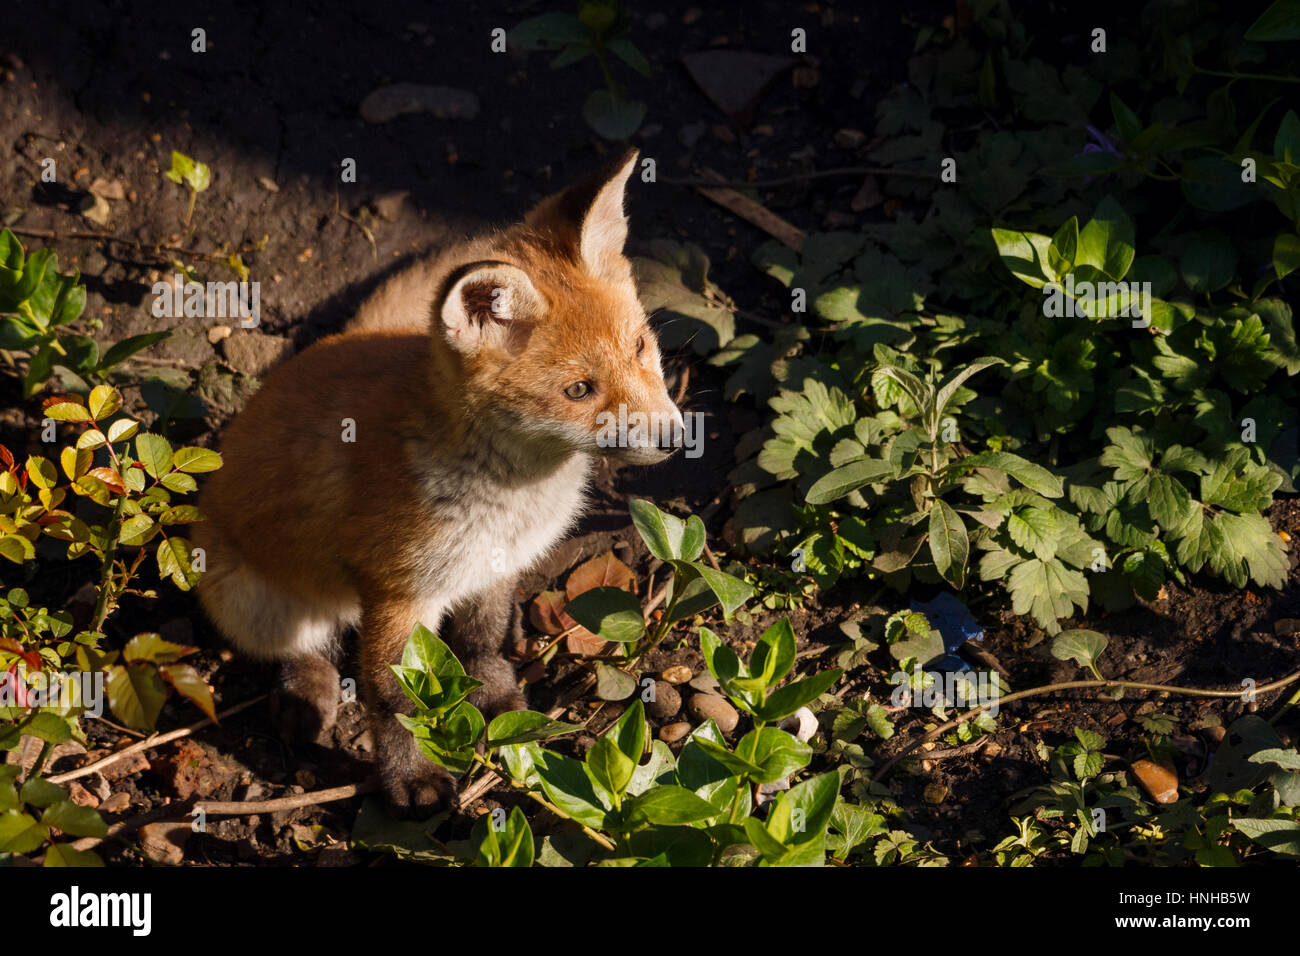 A fox cub in an urban garden Stock Photo